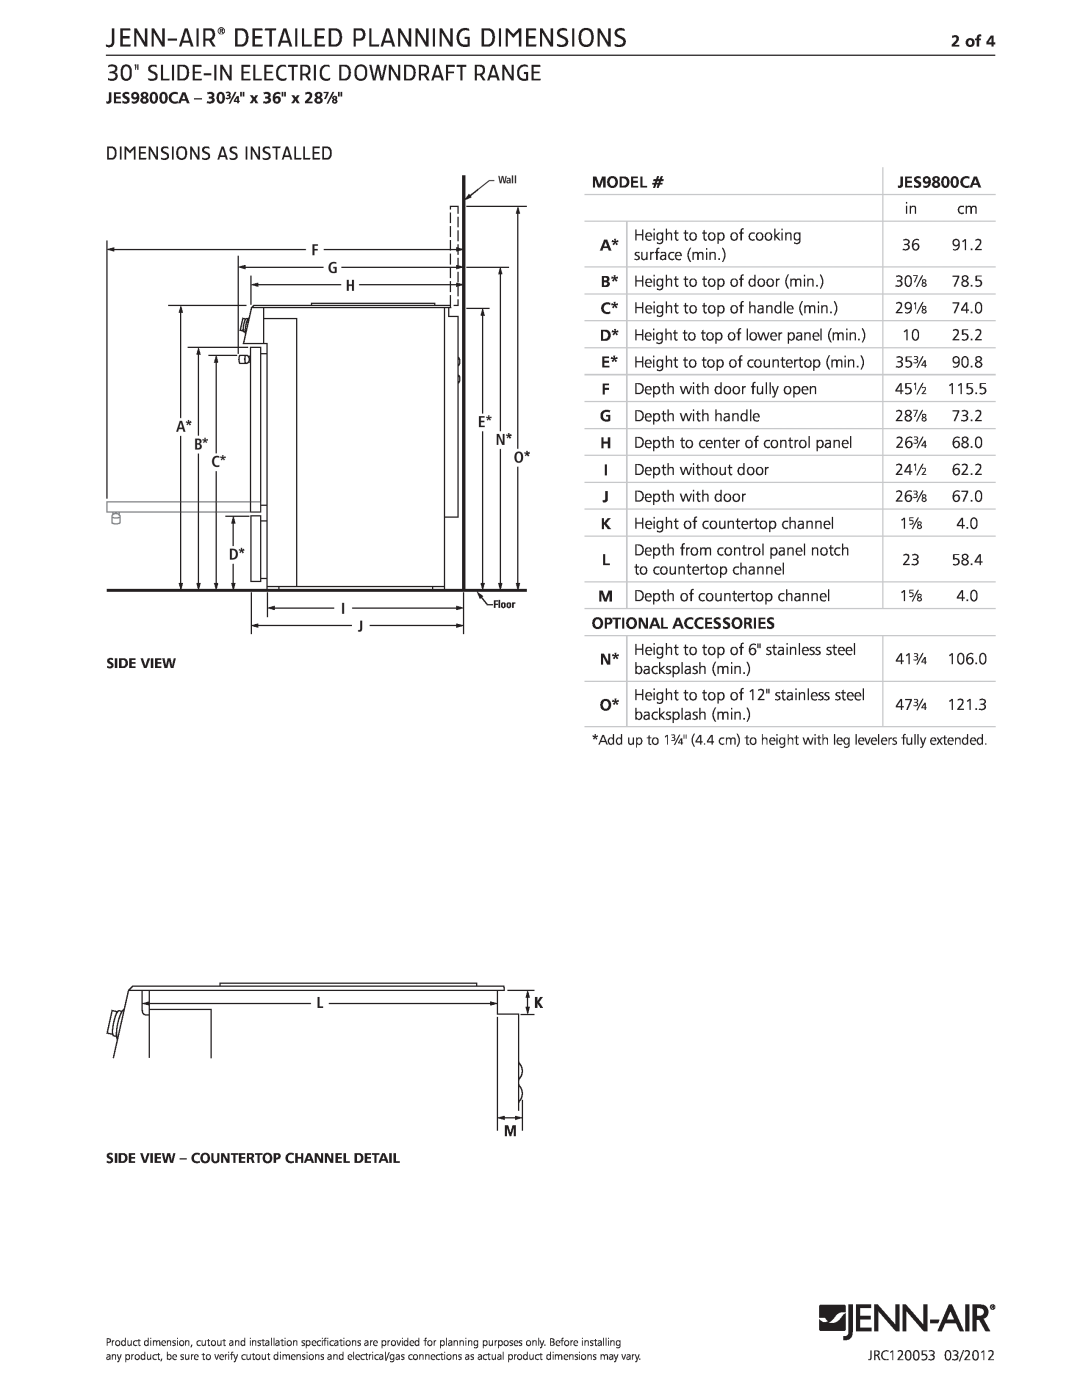 Jenn-Air JES9800CA Slide-Inelectric Downdraft Range, Dimensions As Installed, Jenn-Air Detailed Planning Dimensions 